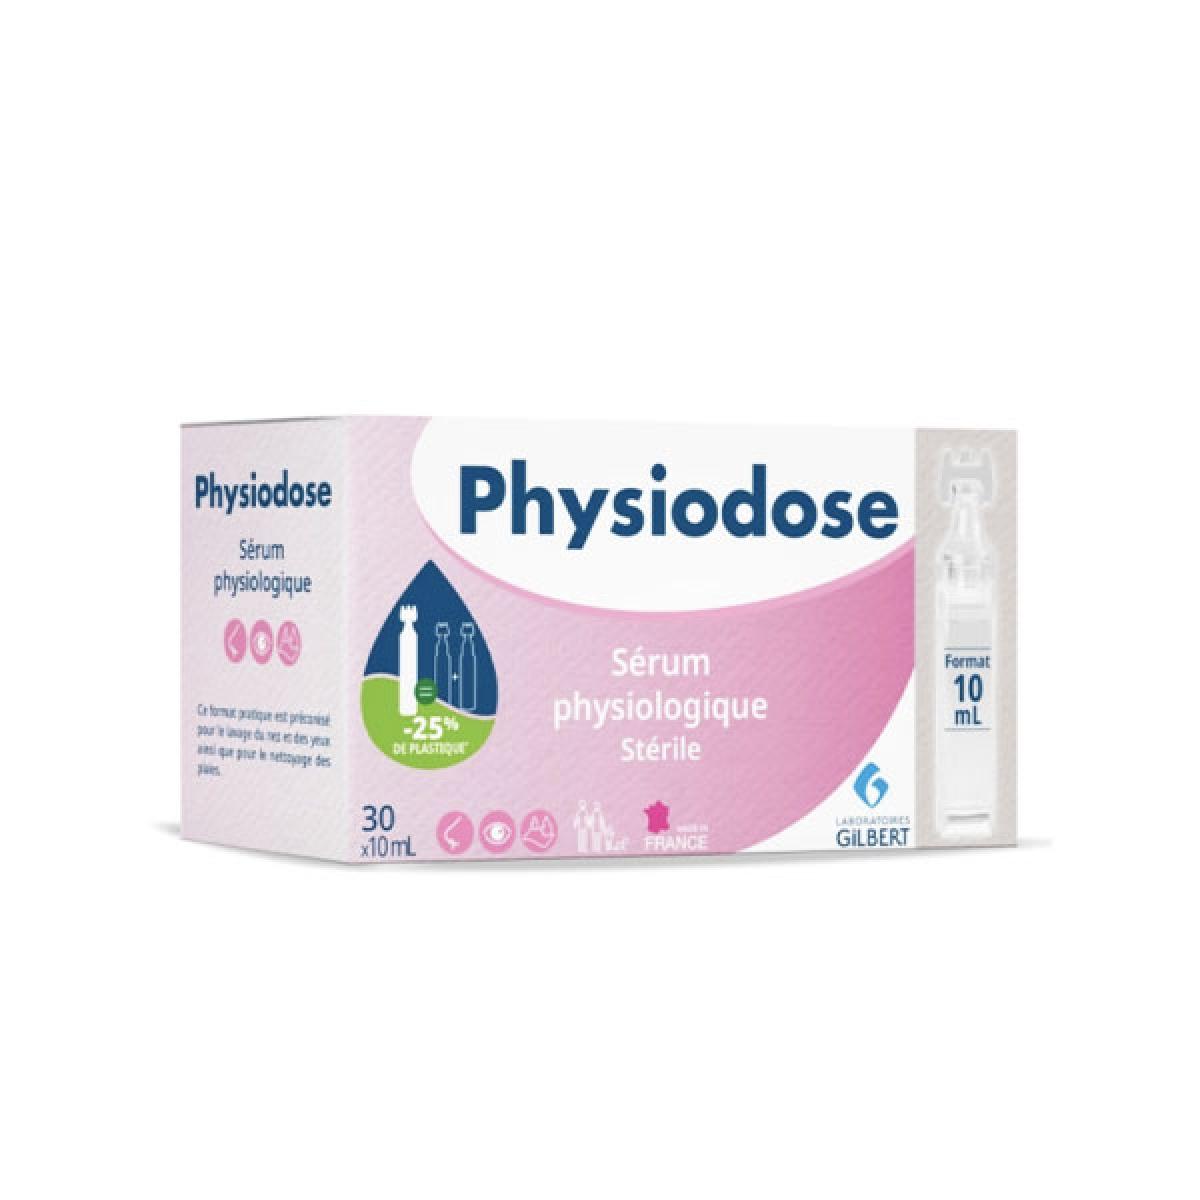 GILBERT Physiodose sérum physiologique stérile 30 unidoses de 10ml -  Parapharmacie - Pharmarket